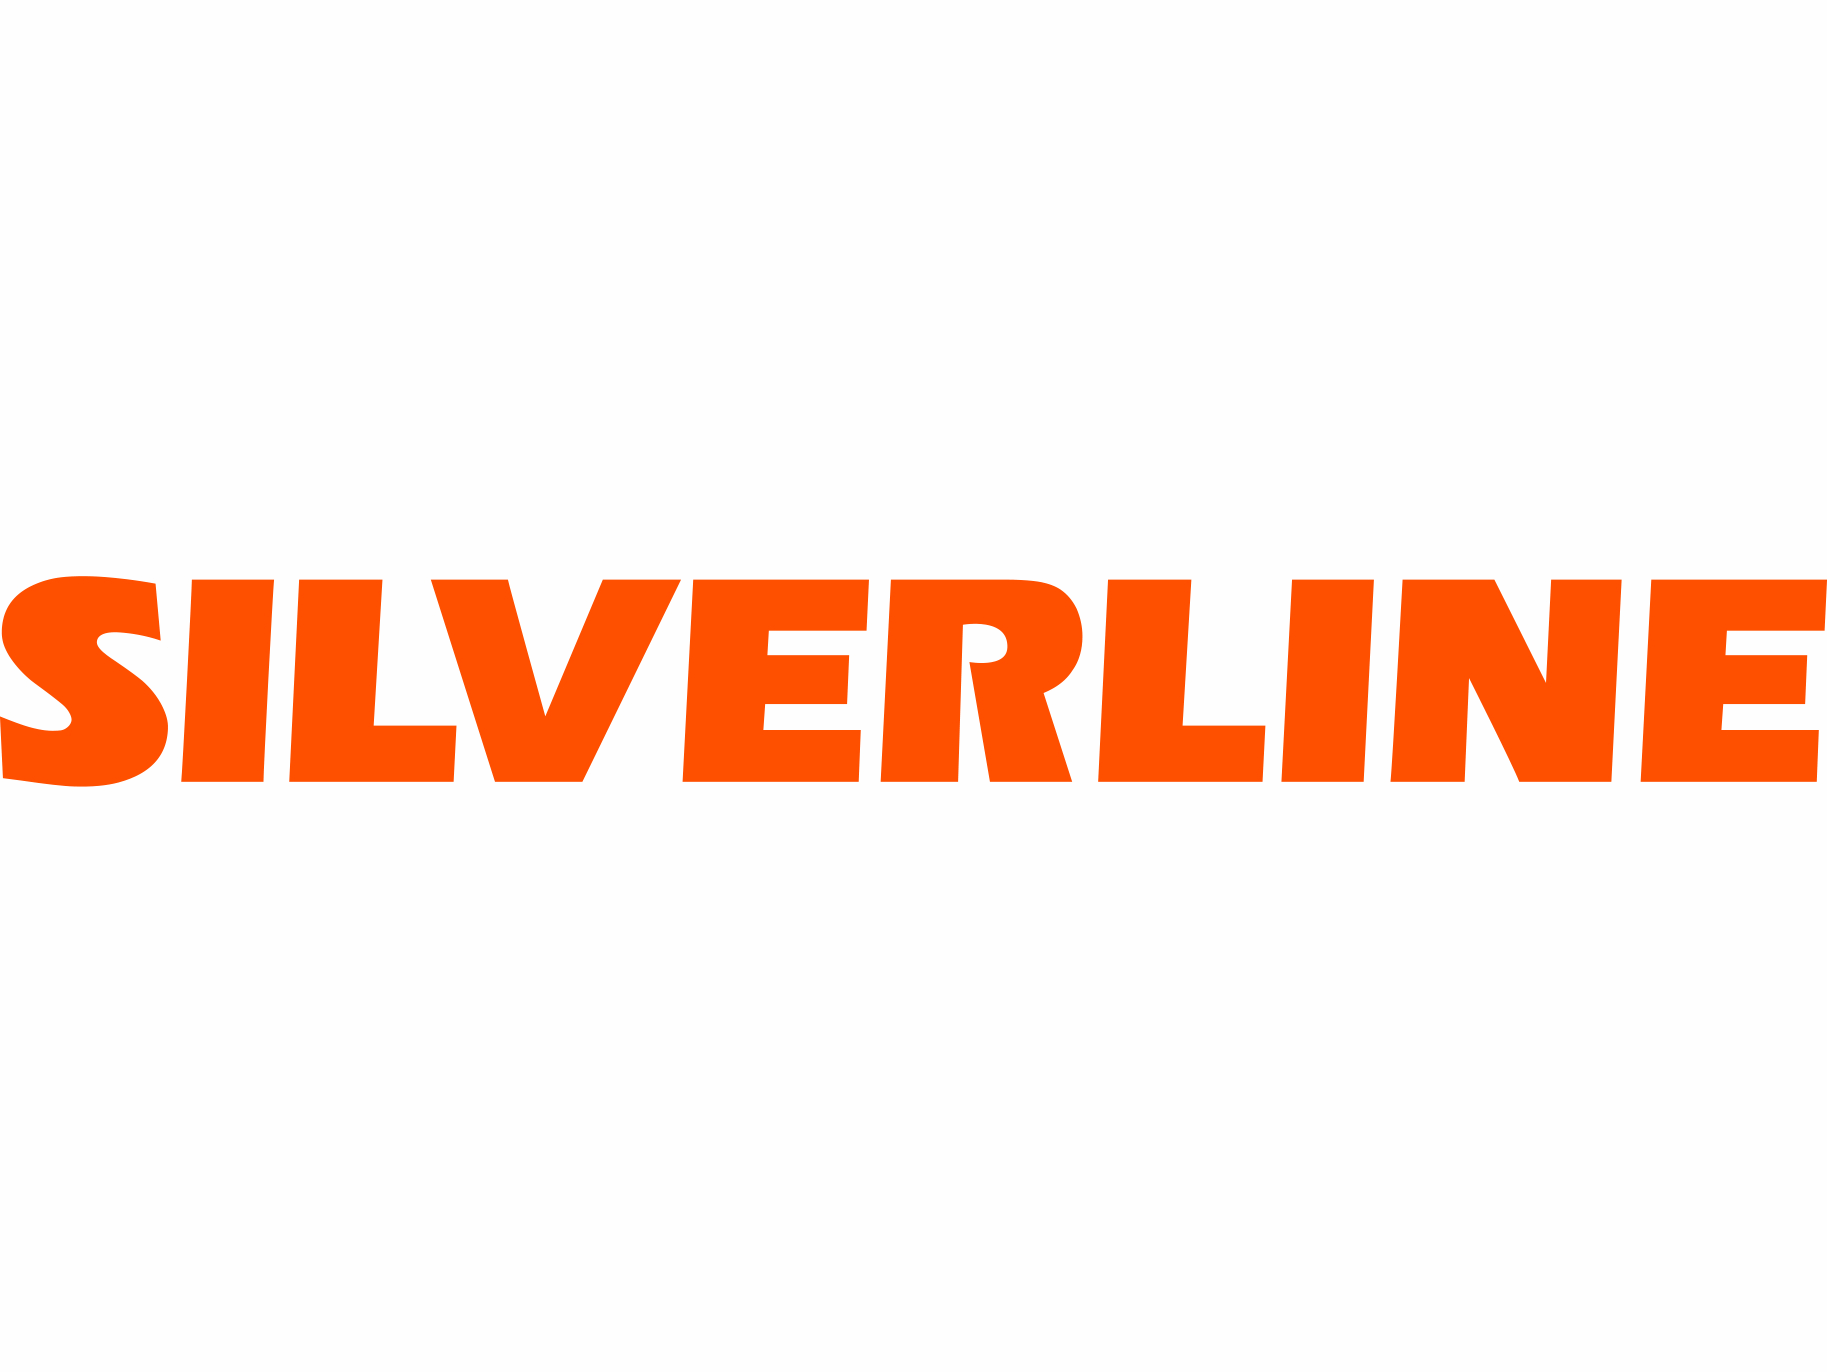 Silverline-1798f958-log1